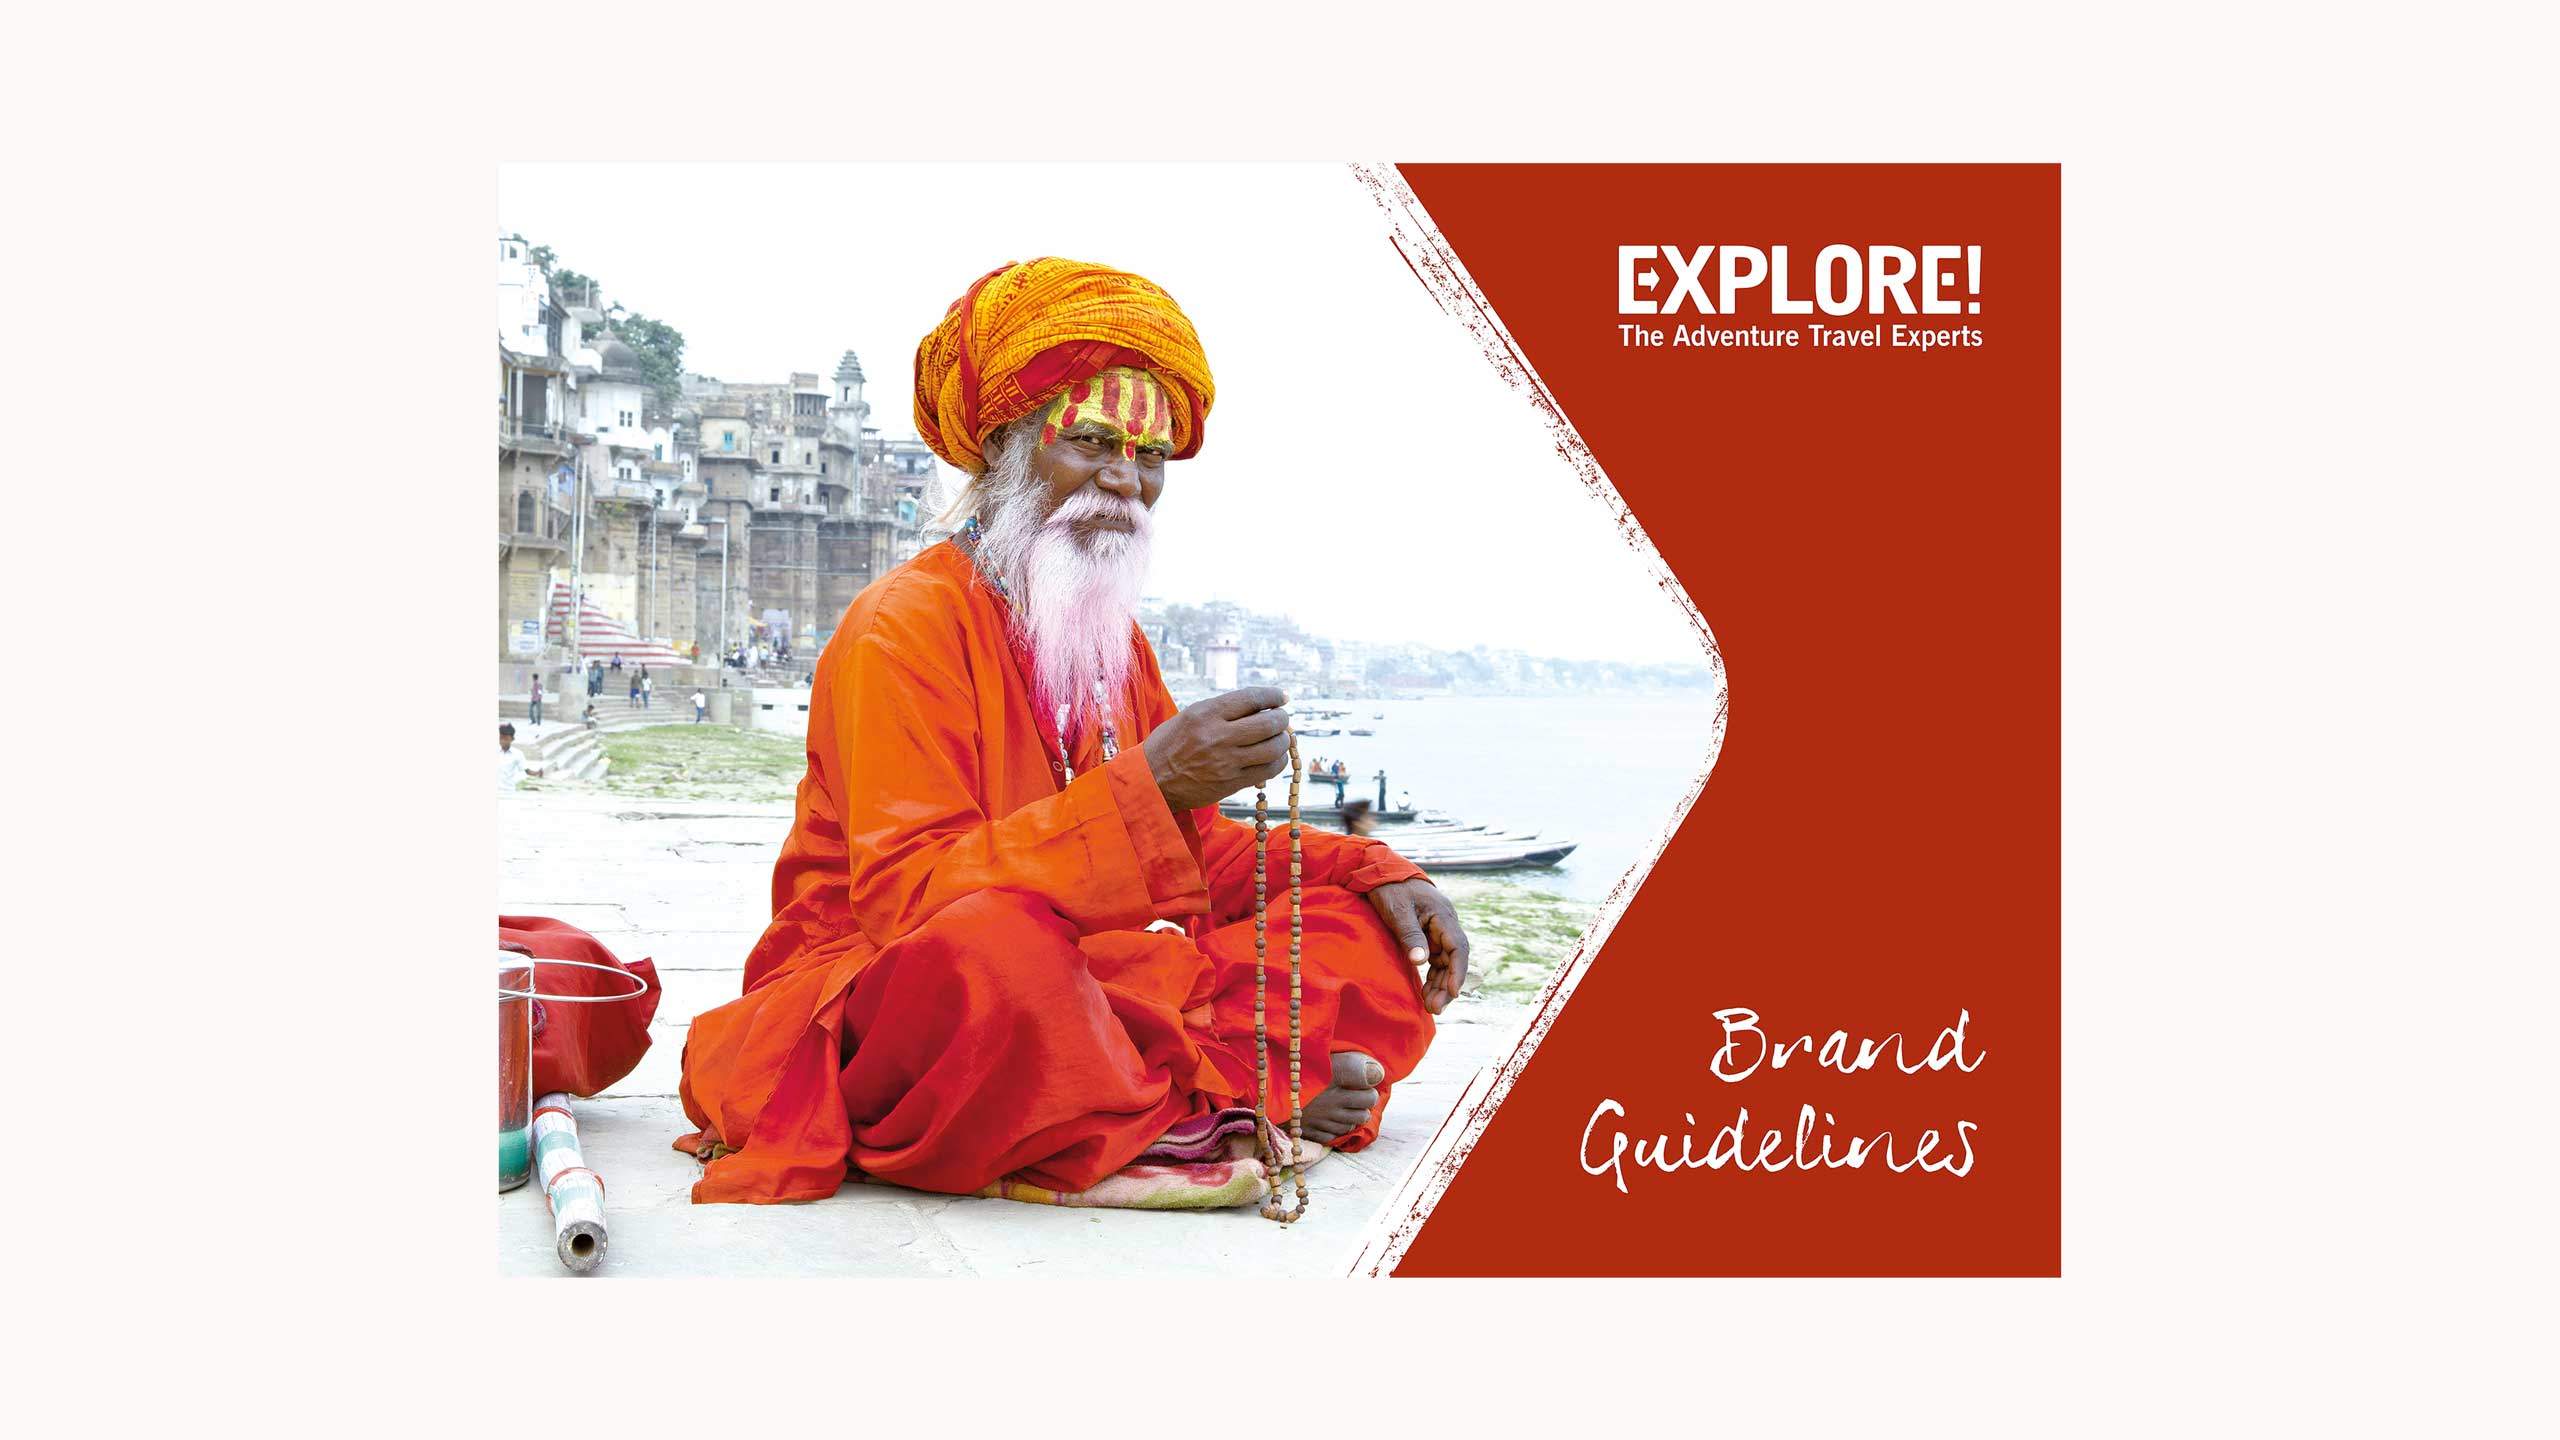 adventure travel branding brand guidelines covers explore worldwide